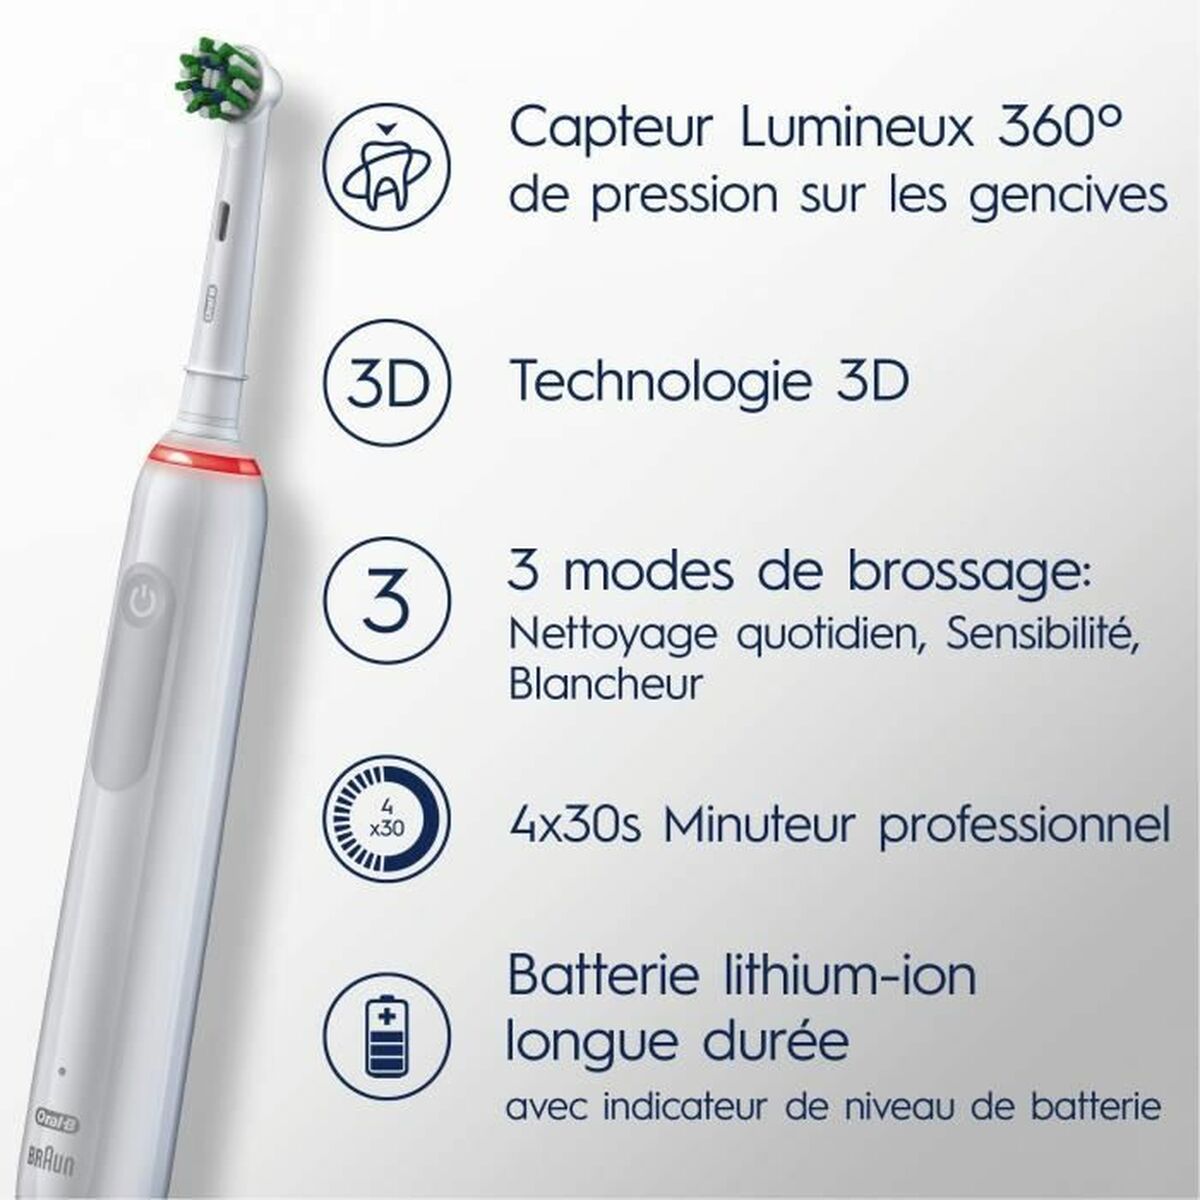 Electric Toothbrush Oral-B Pro 3